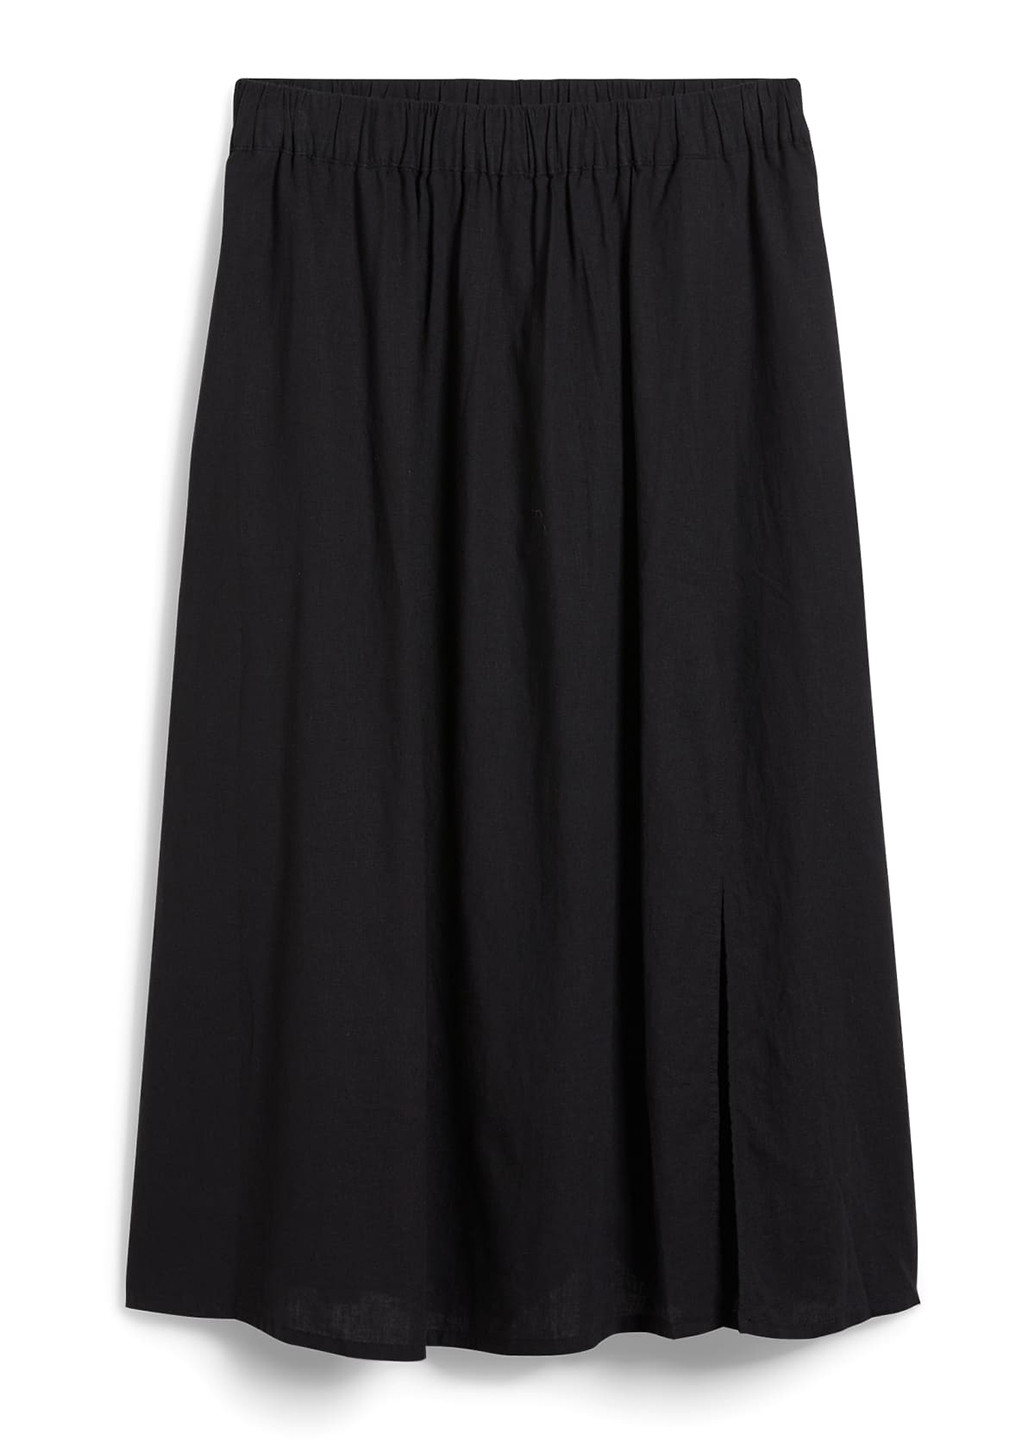 Черная кэжуал однотонная юбка C&A а-силуэта (трапеция)